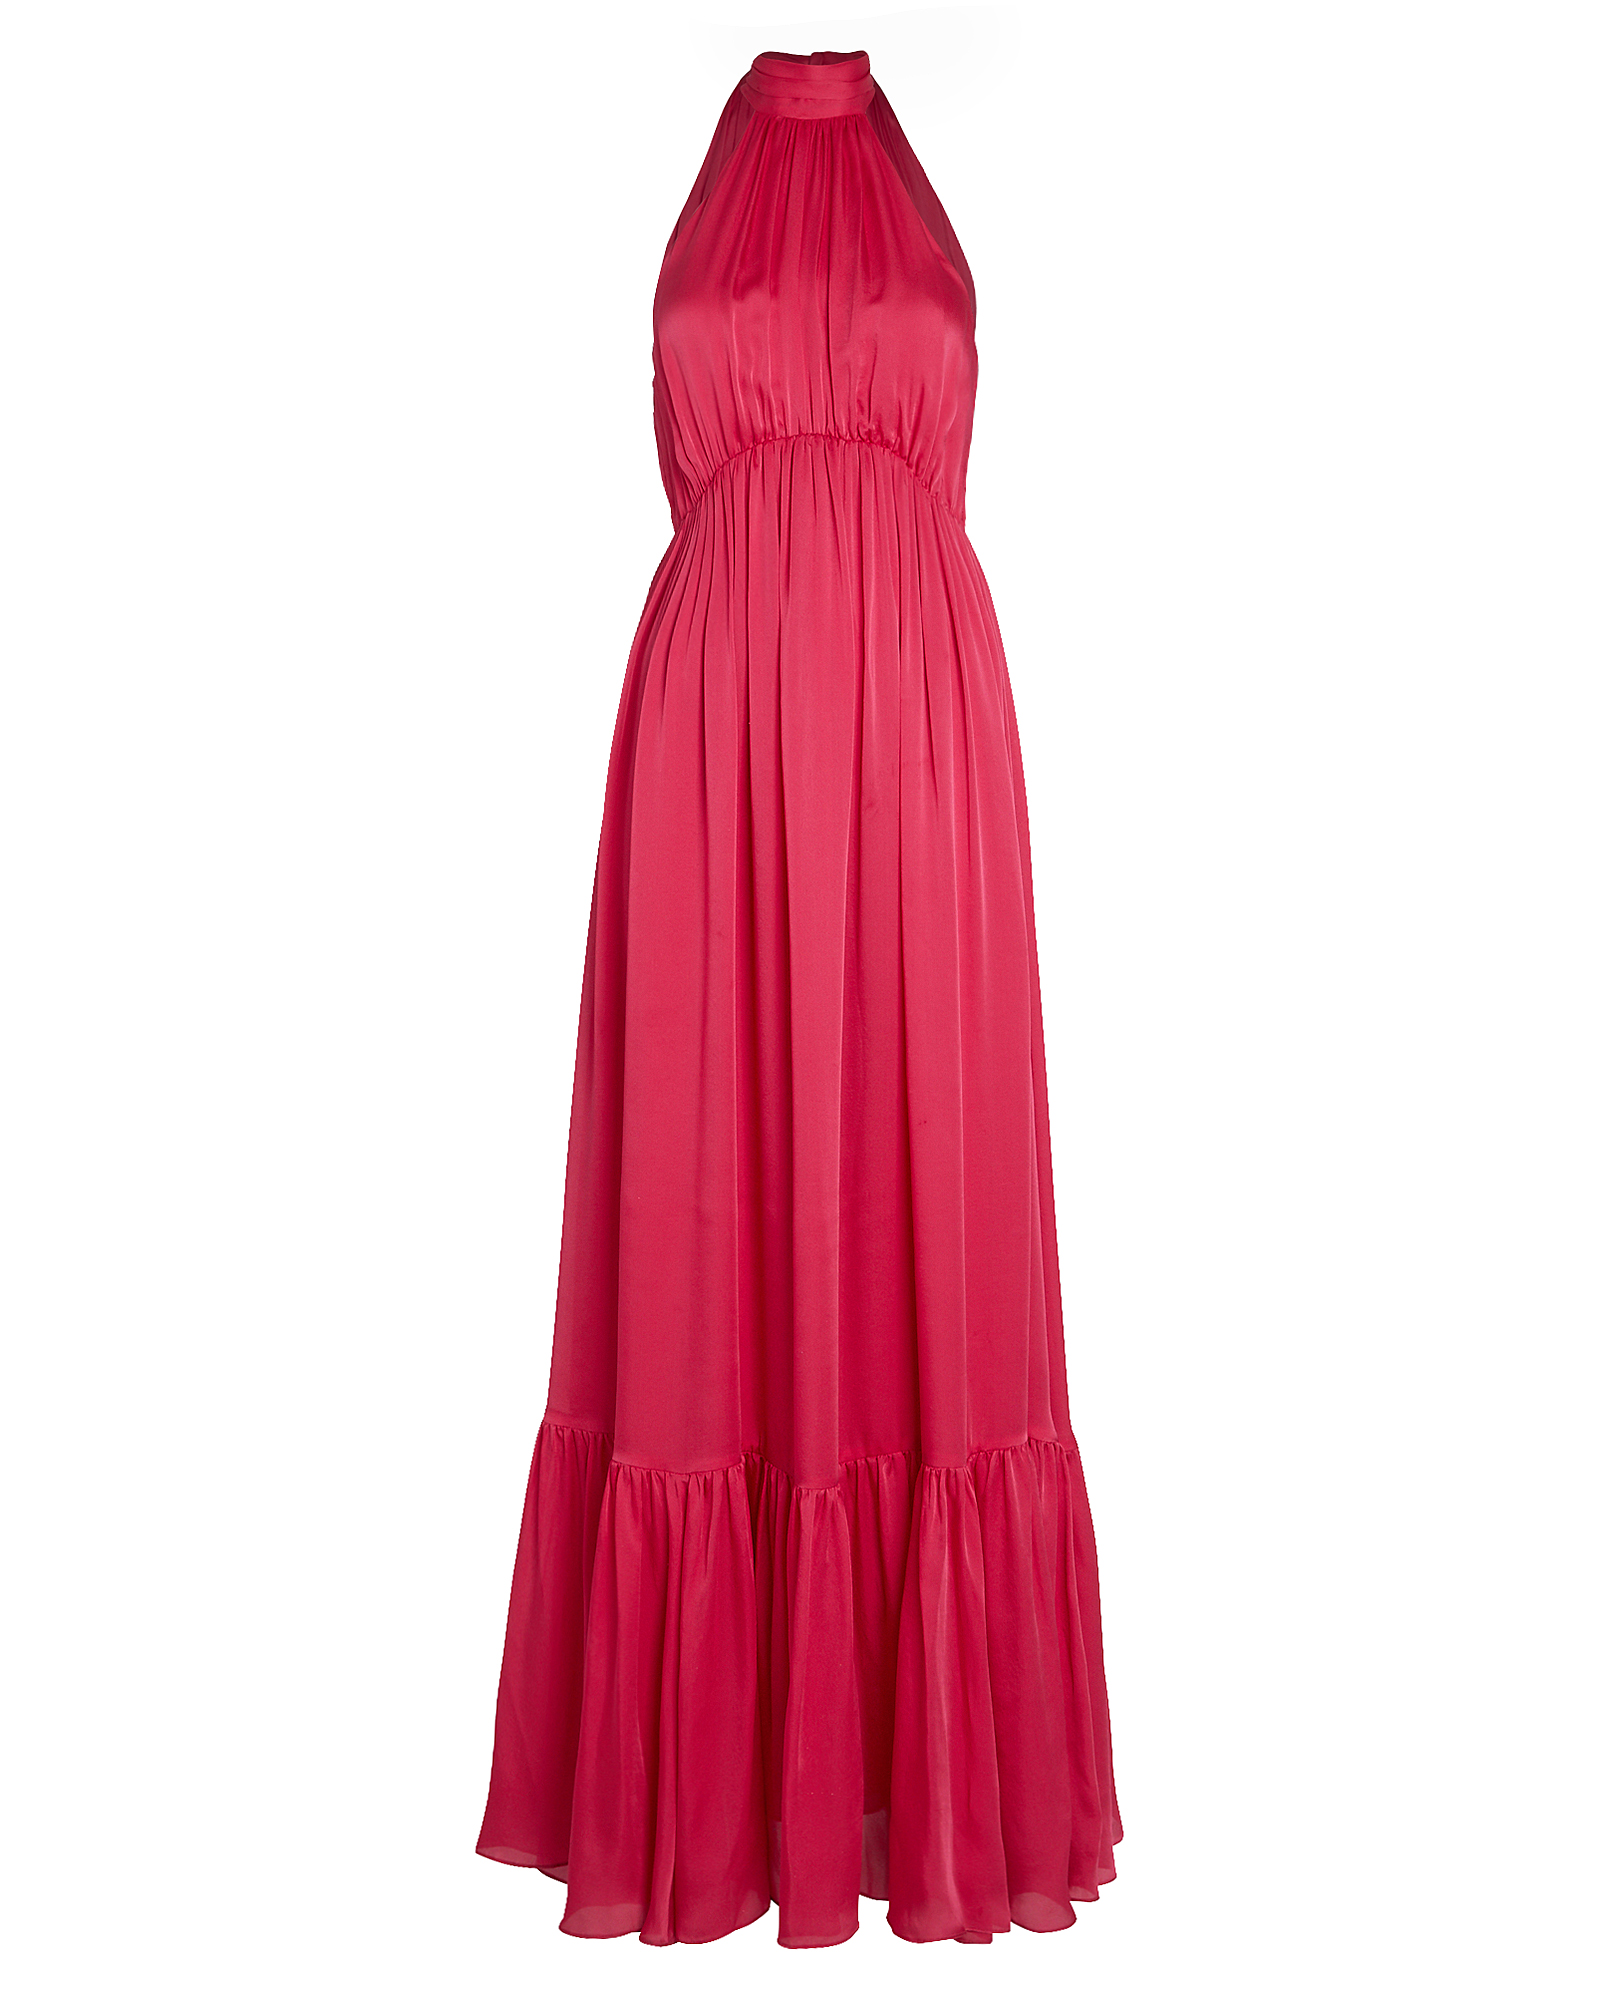 Zimmermann | Gathered Silk Chiffon Gown | INTERMIX®